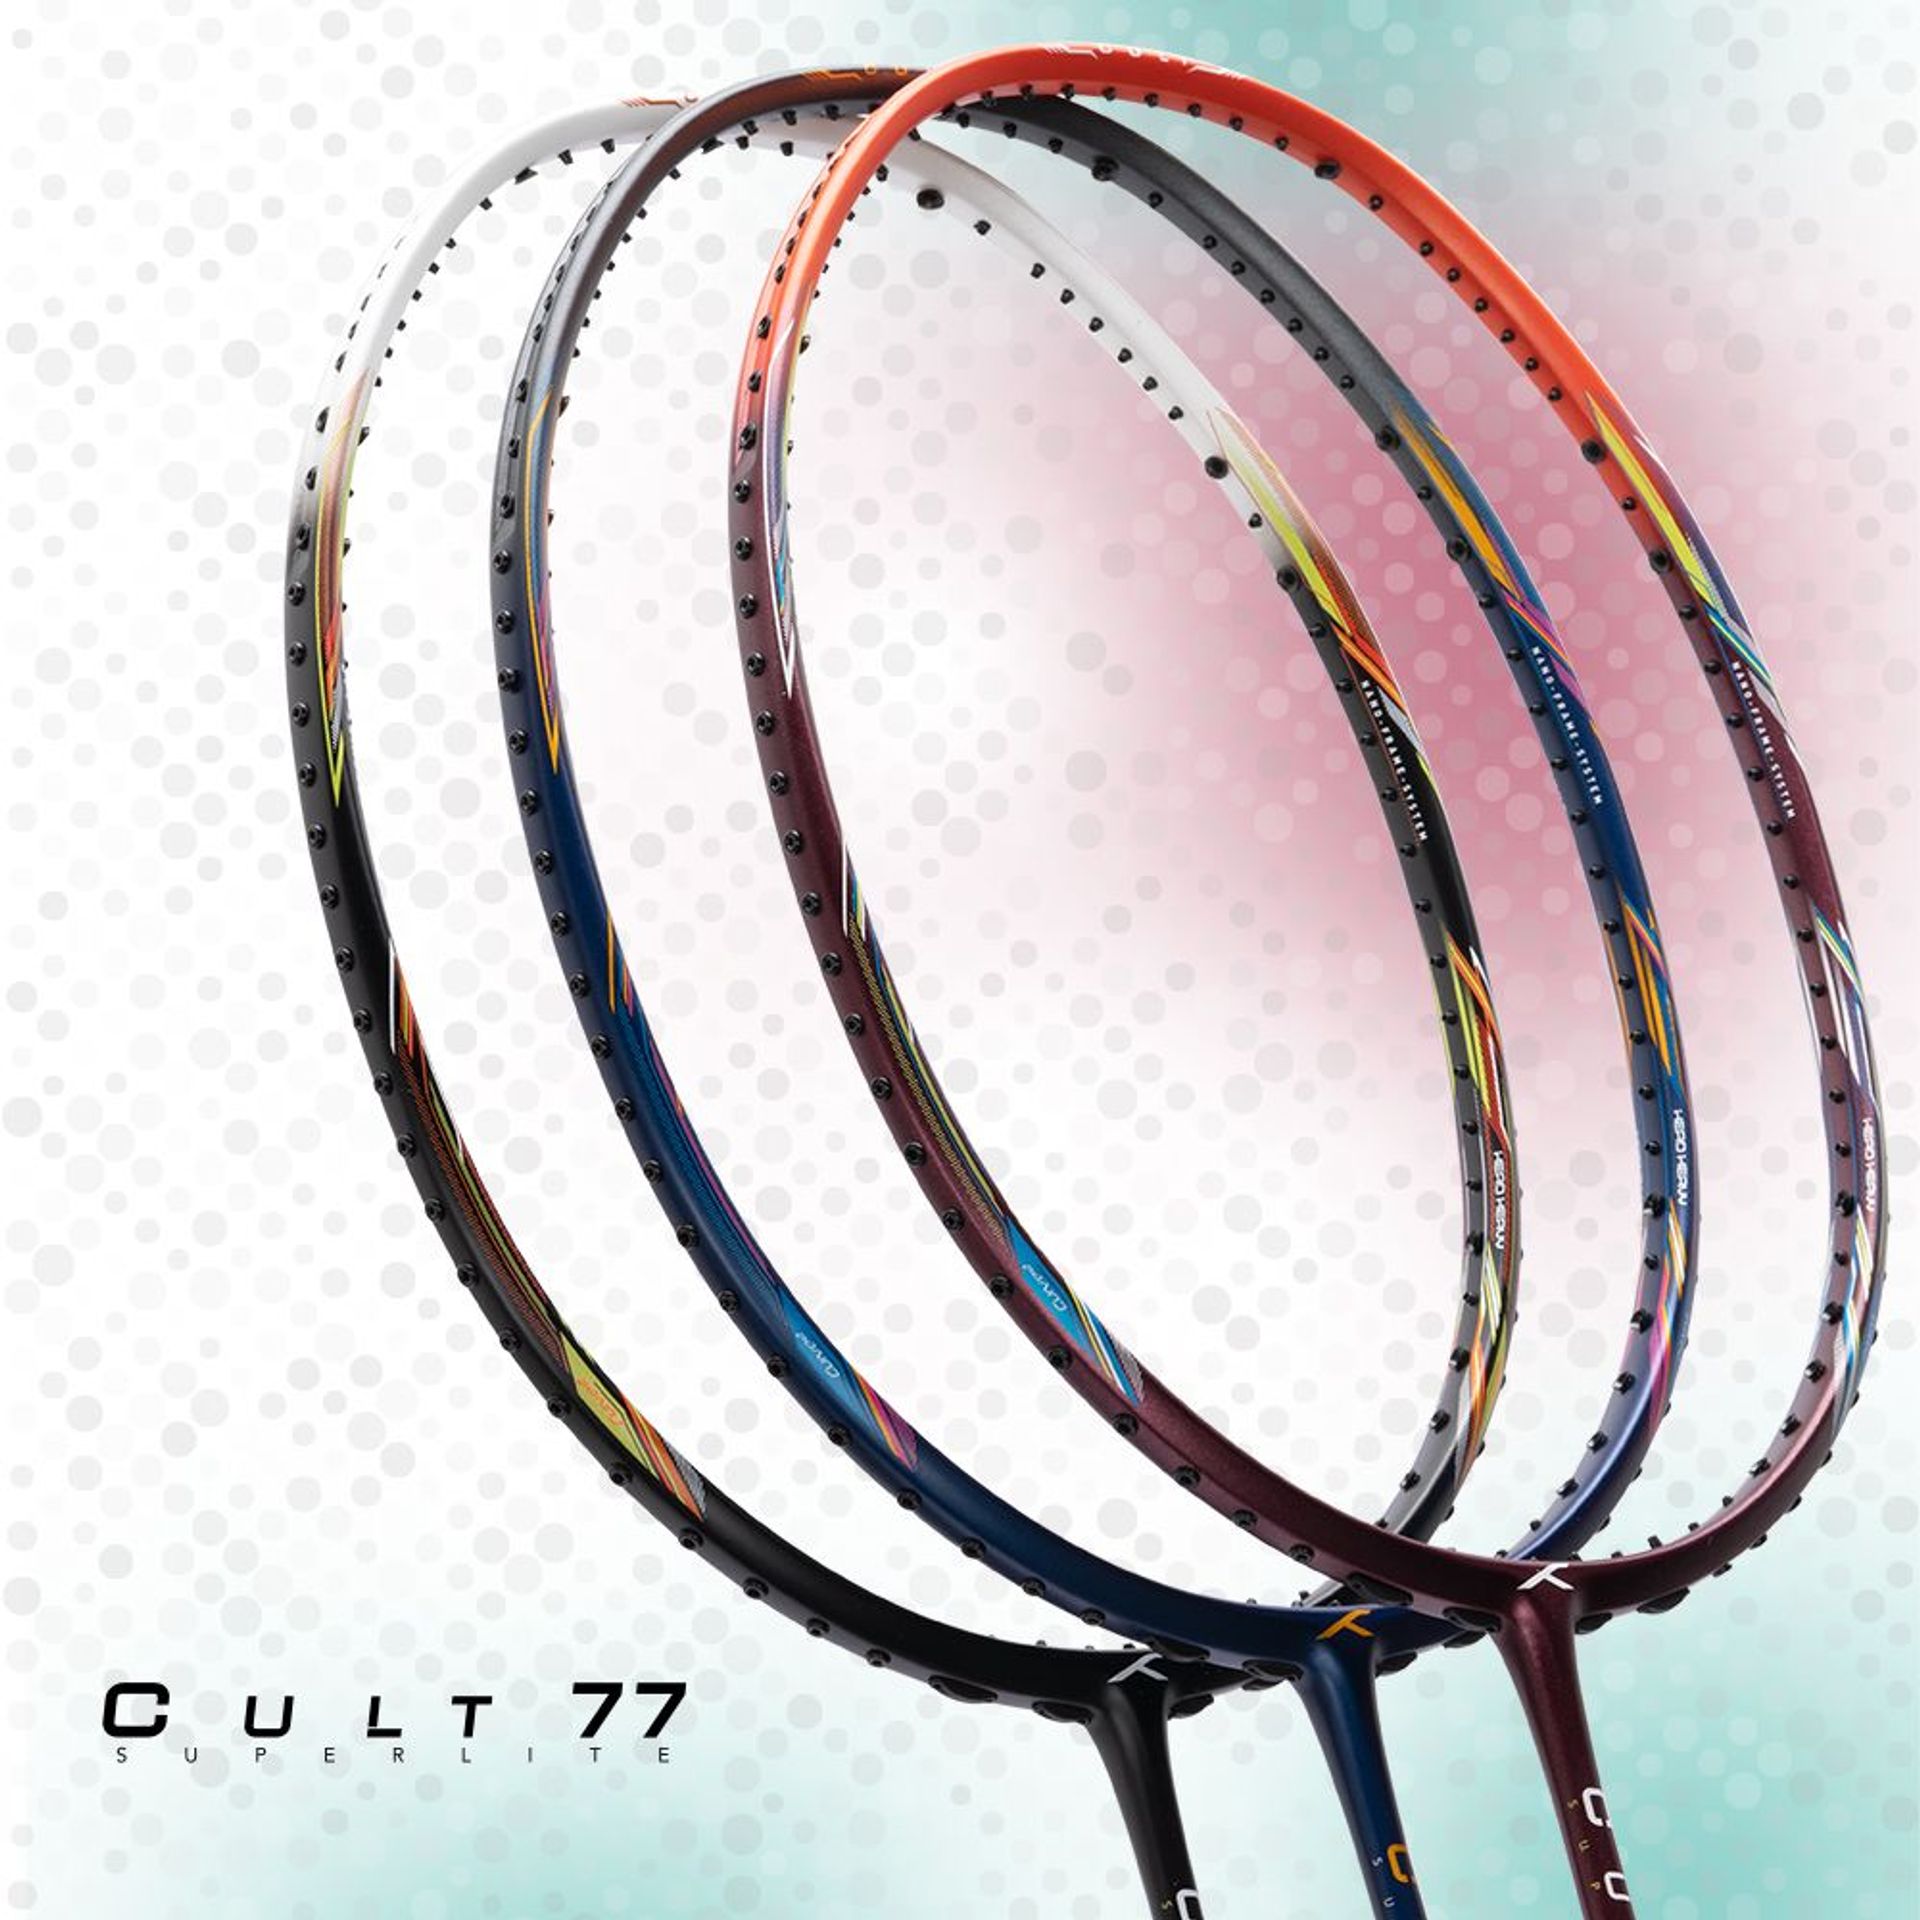 Cult 77 - Badminton Racket - Japan Made Graphite